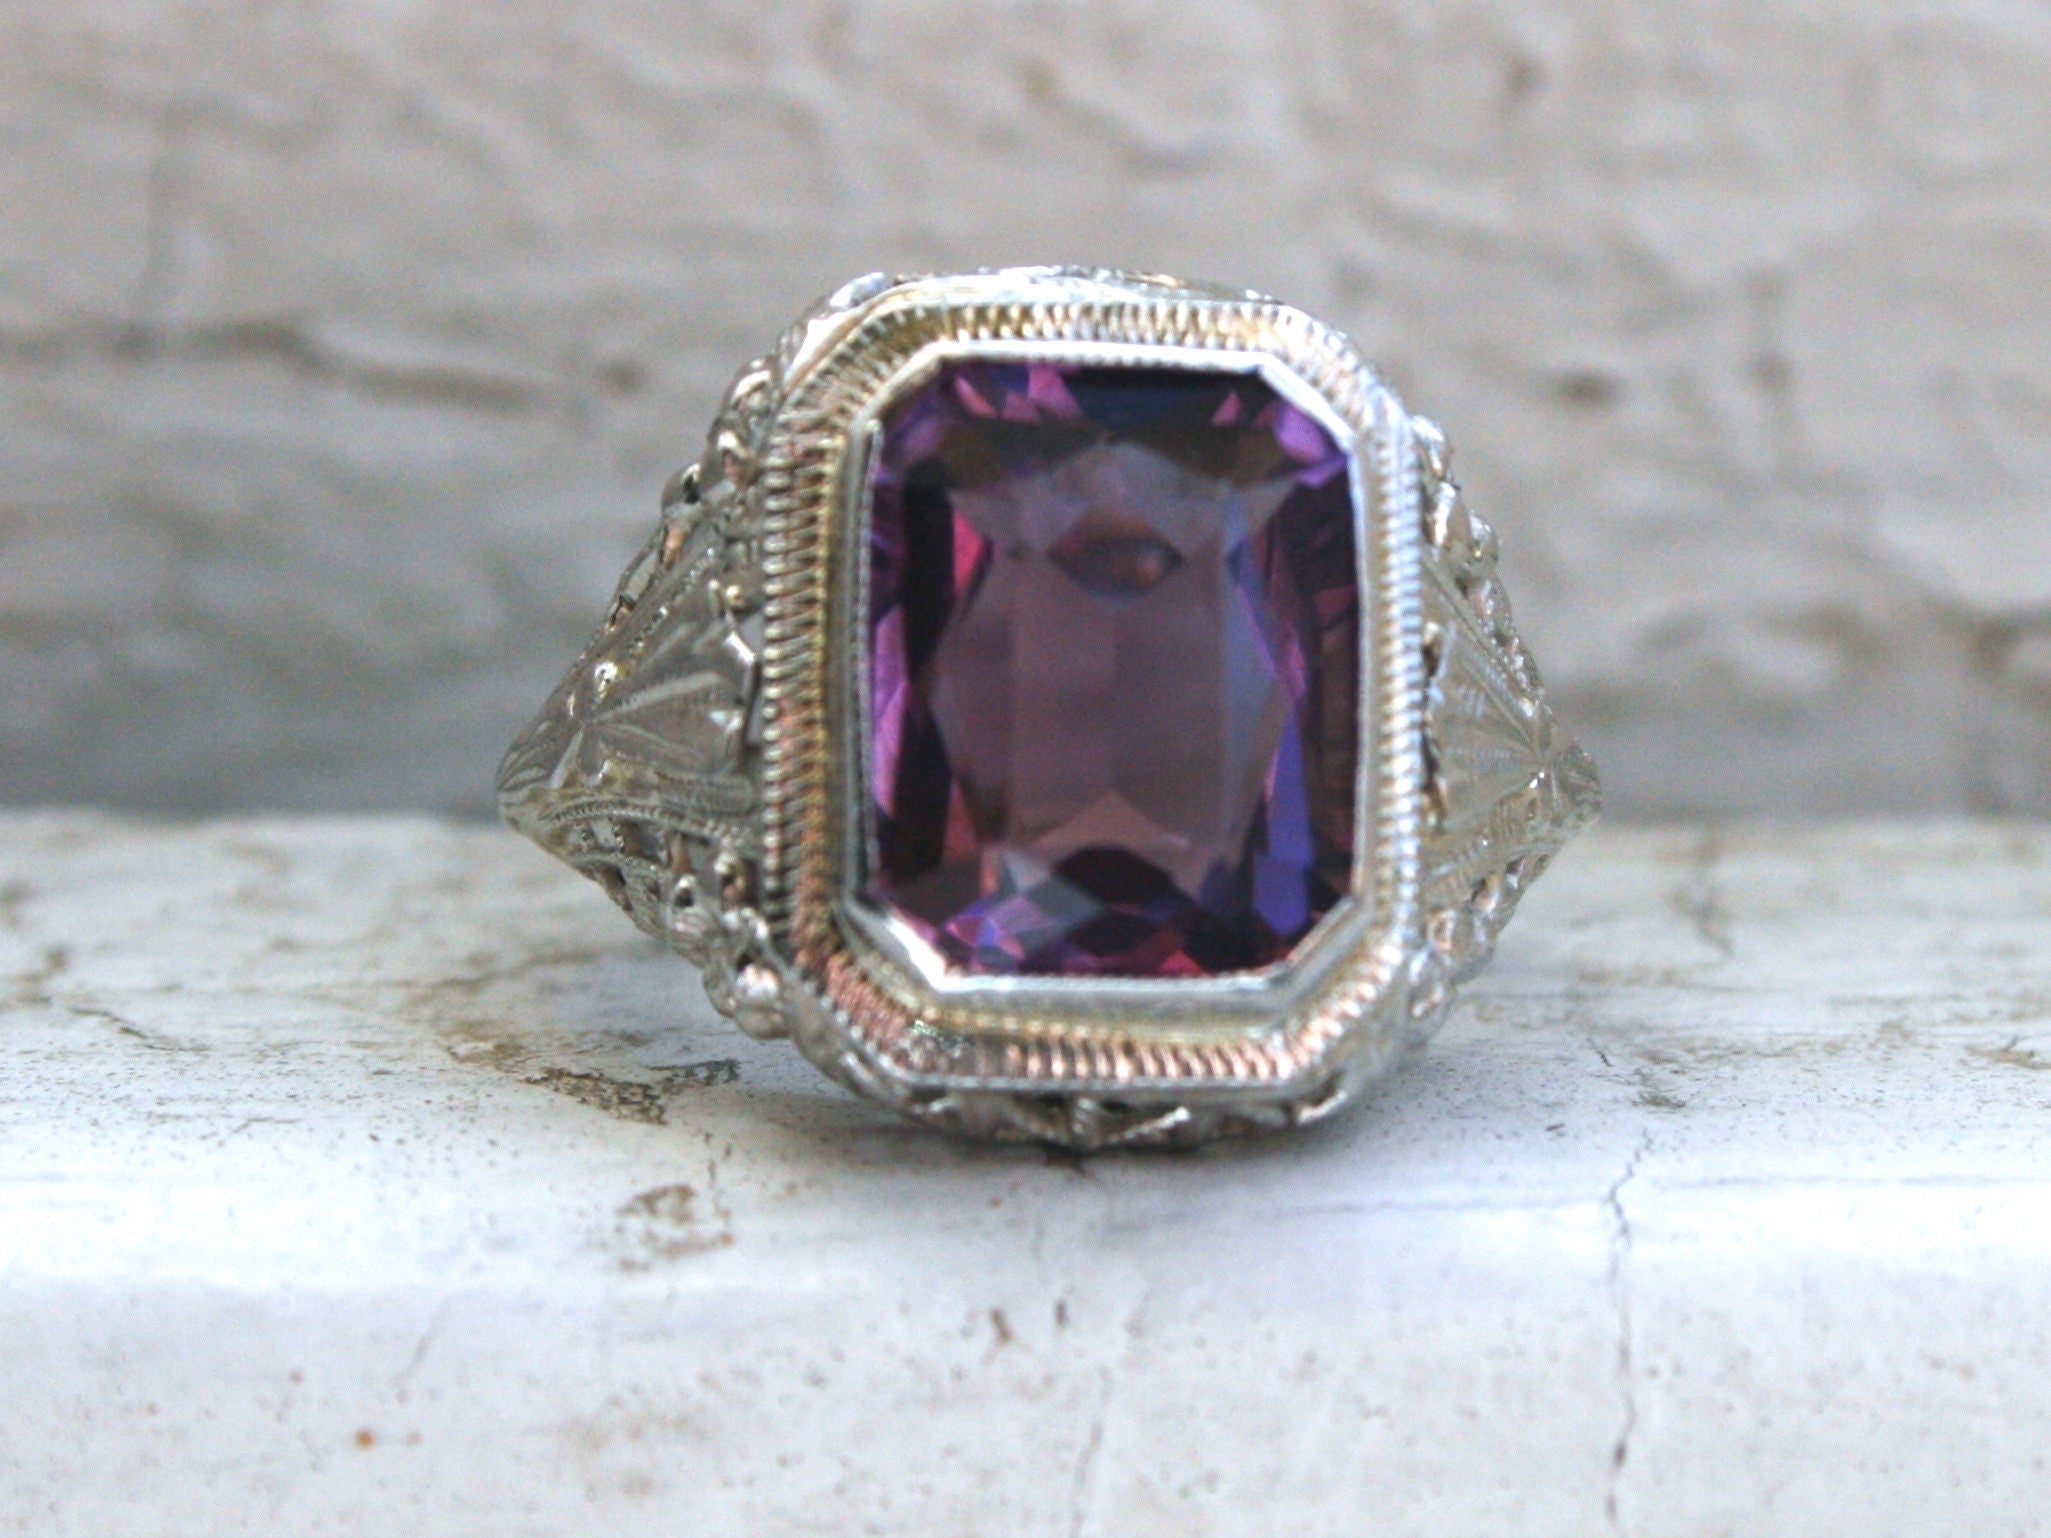 Vintage 14K White Gold Amethyst Engagement Ring - 3.15ct.